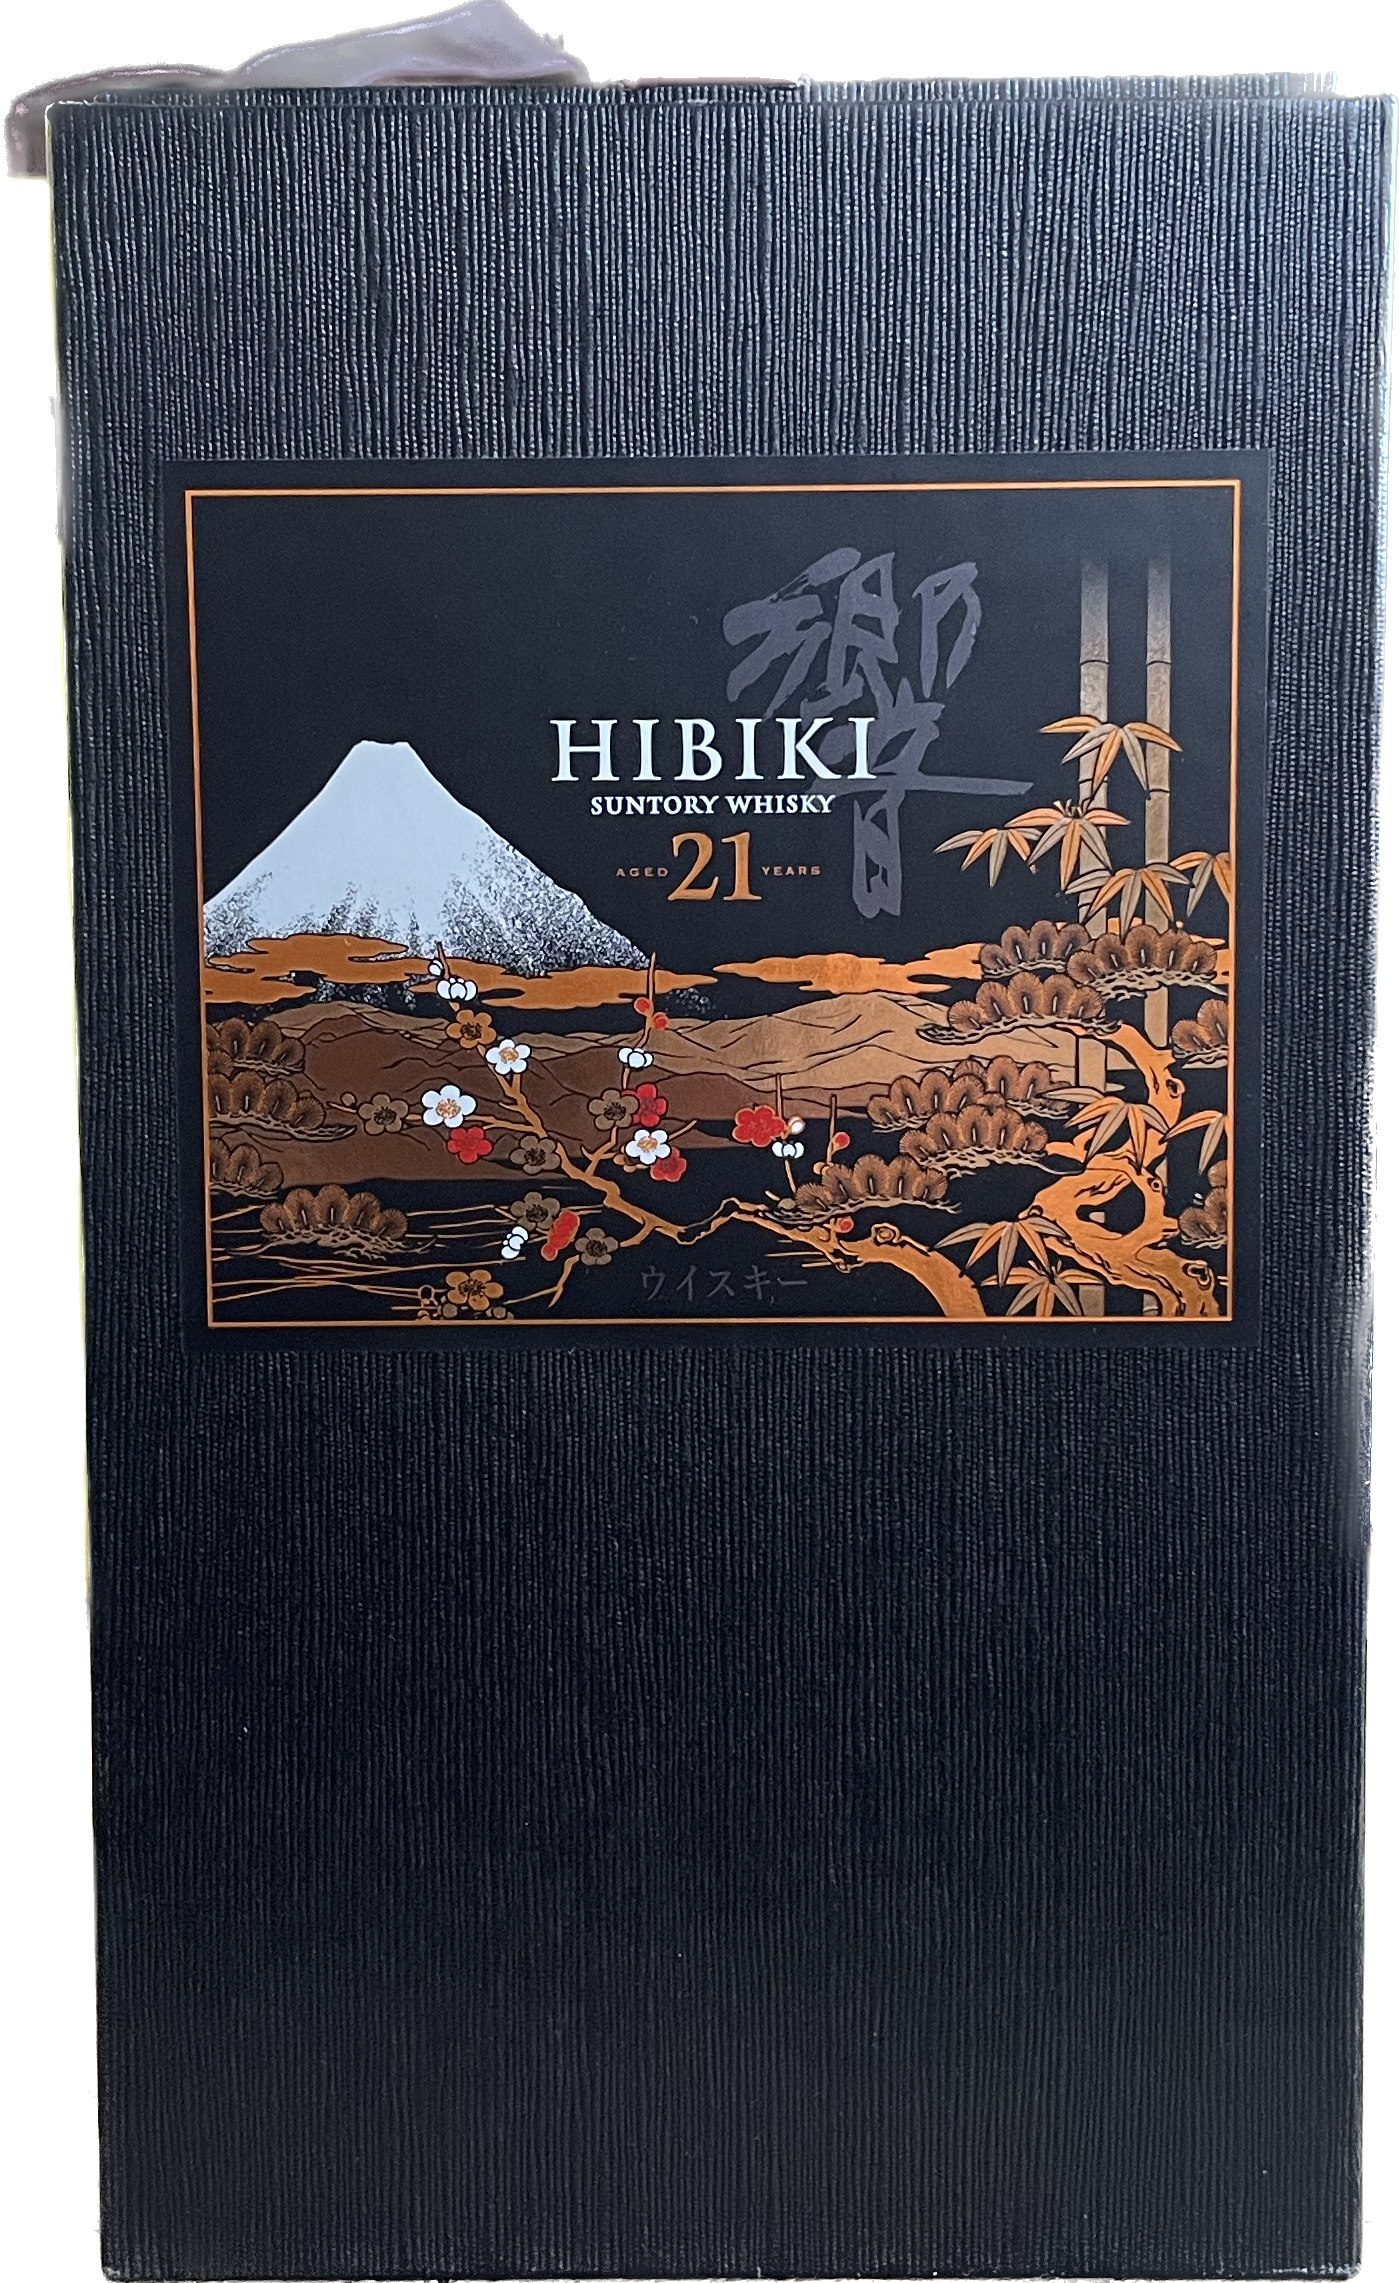 Hibiki 21 Jahre Limited Edition Suntory Whisky